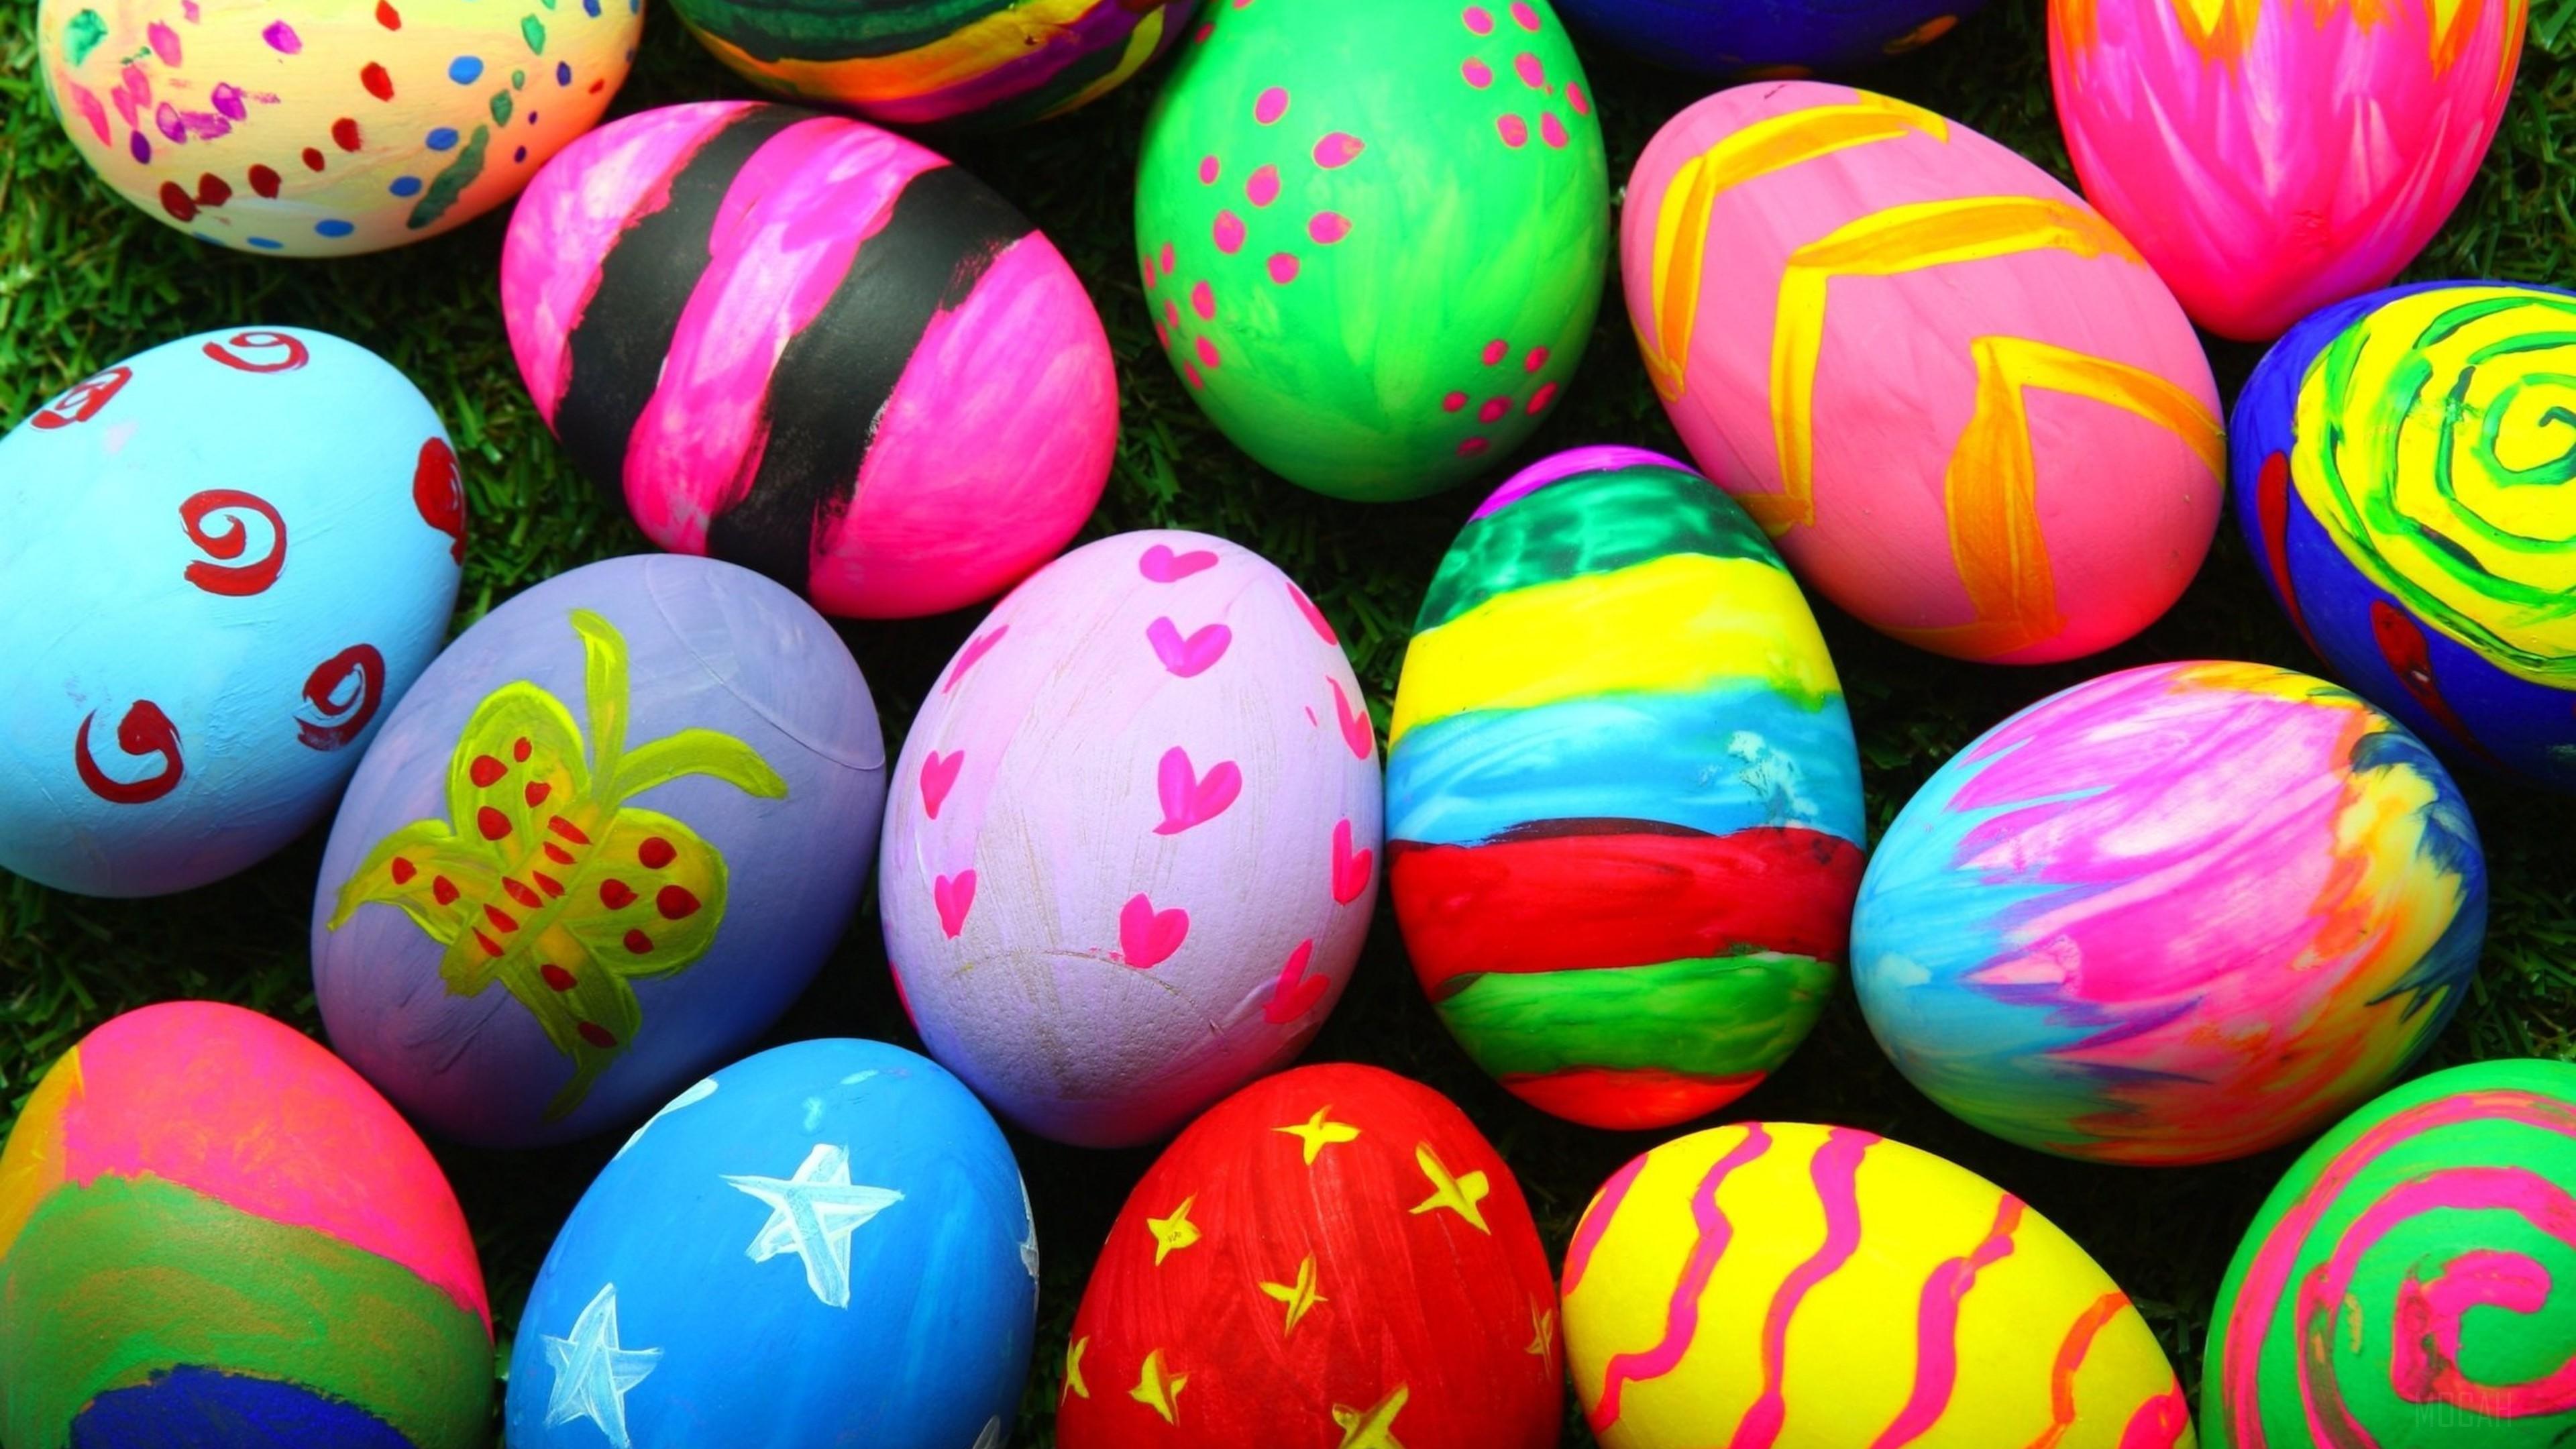 HD wallpaper, Colorful Easter Eggs 4K